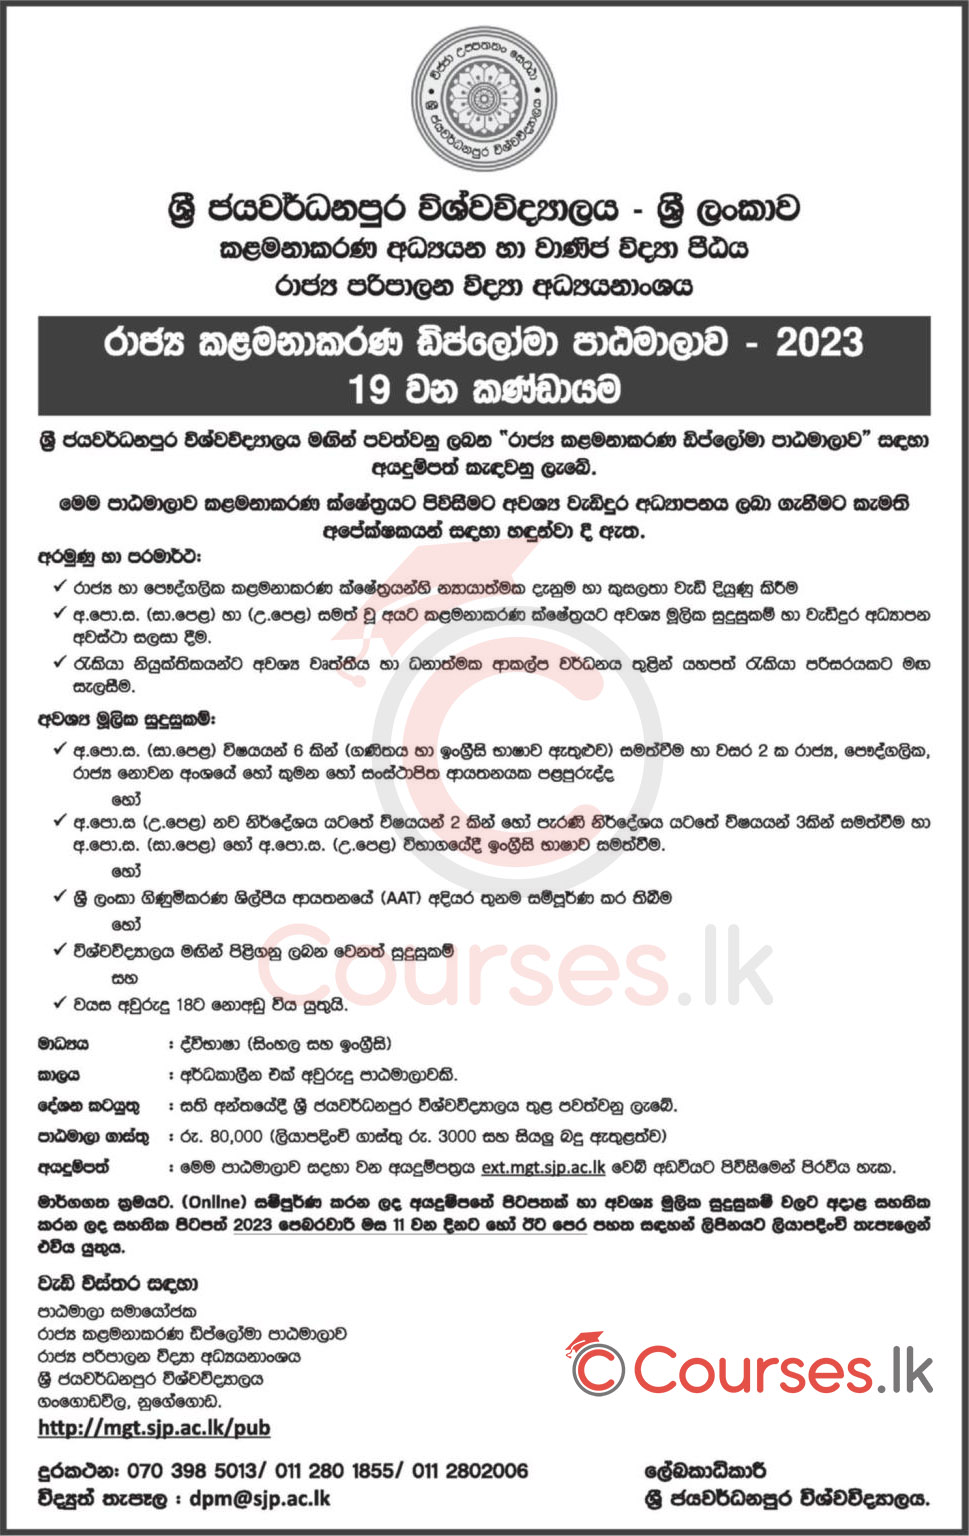 Diploma in Public Management 2023 - University of Sri Jayewardenepura